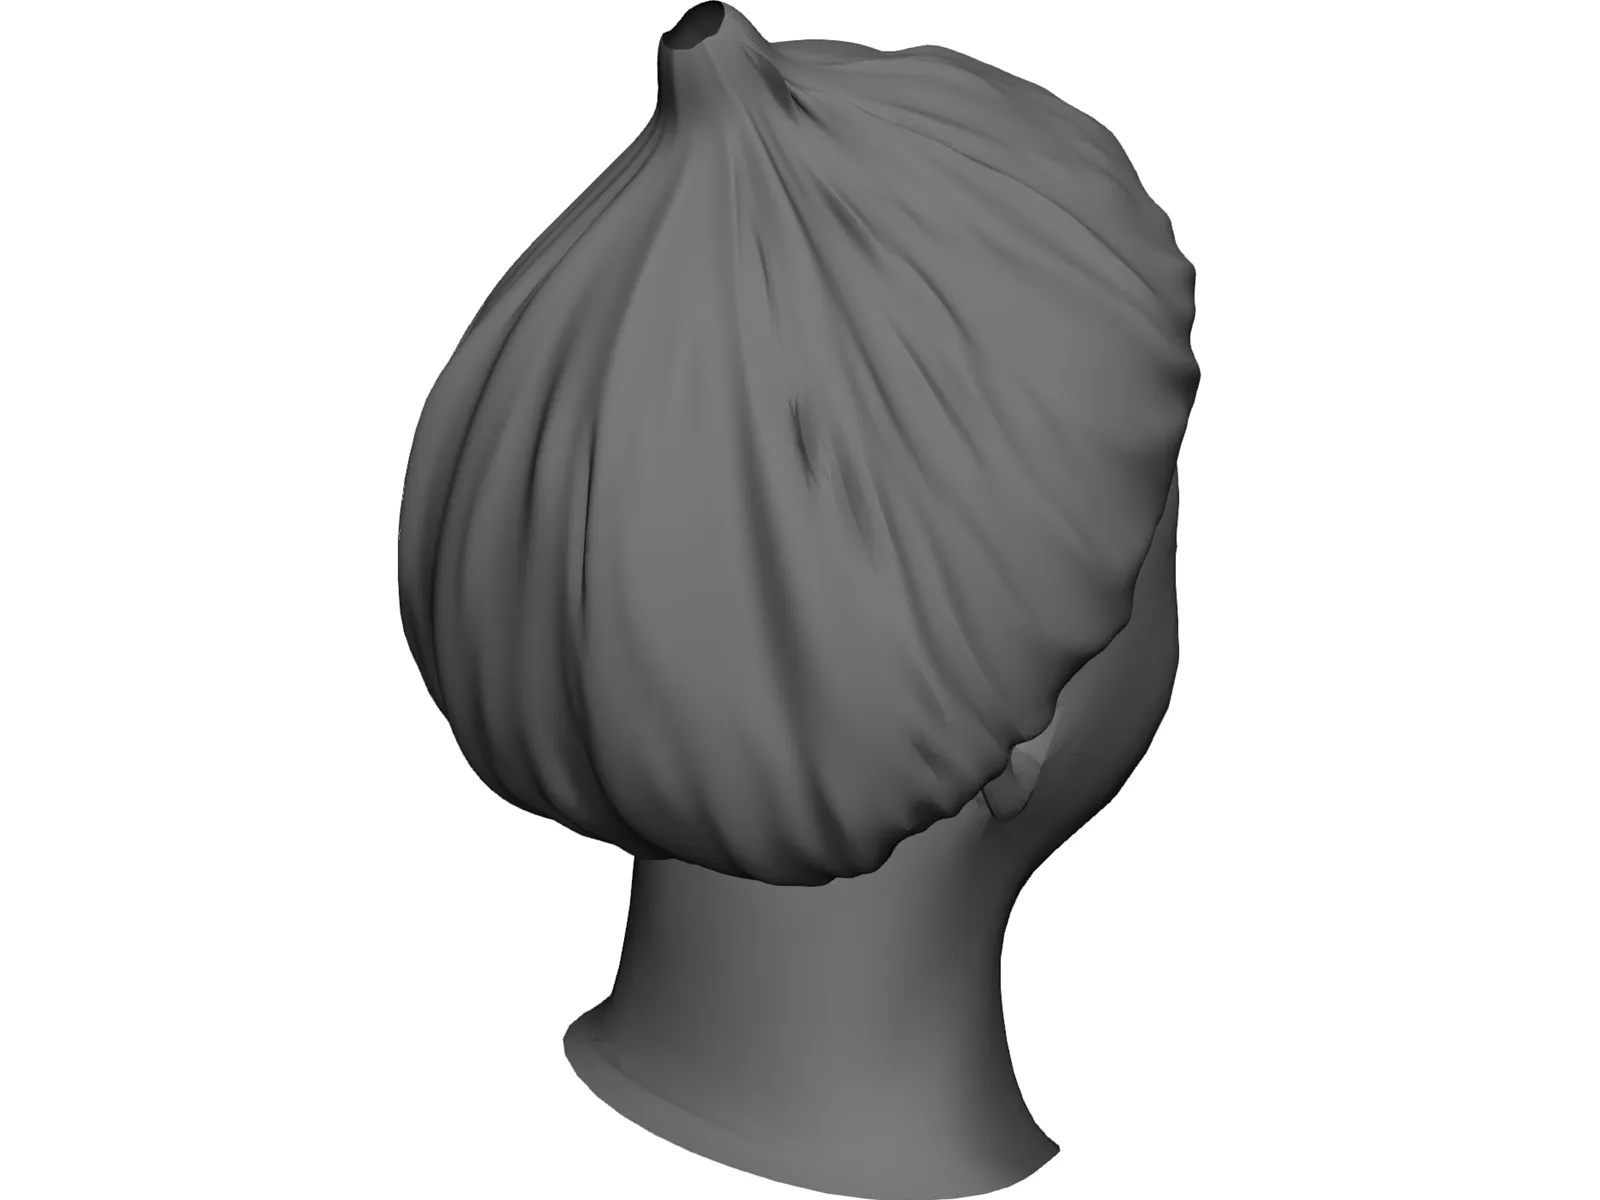 Hair Free 3D Models download - Free3D